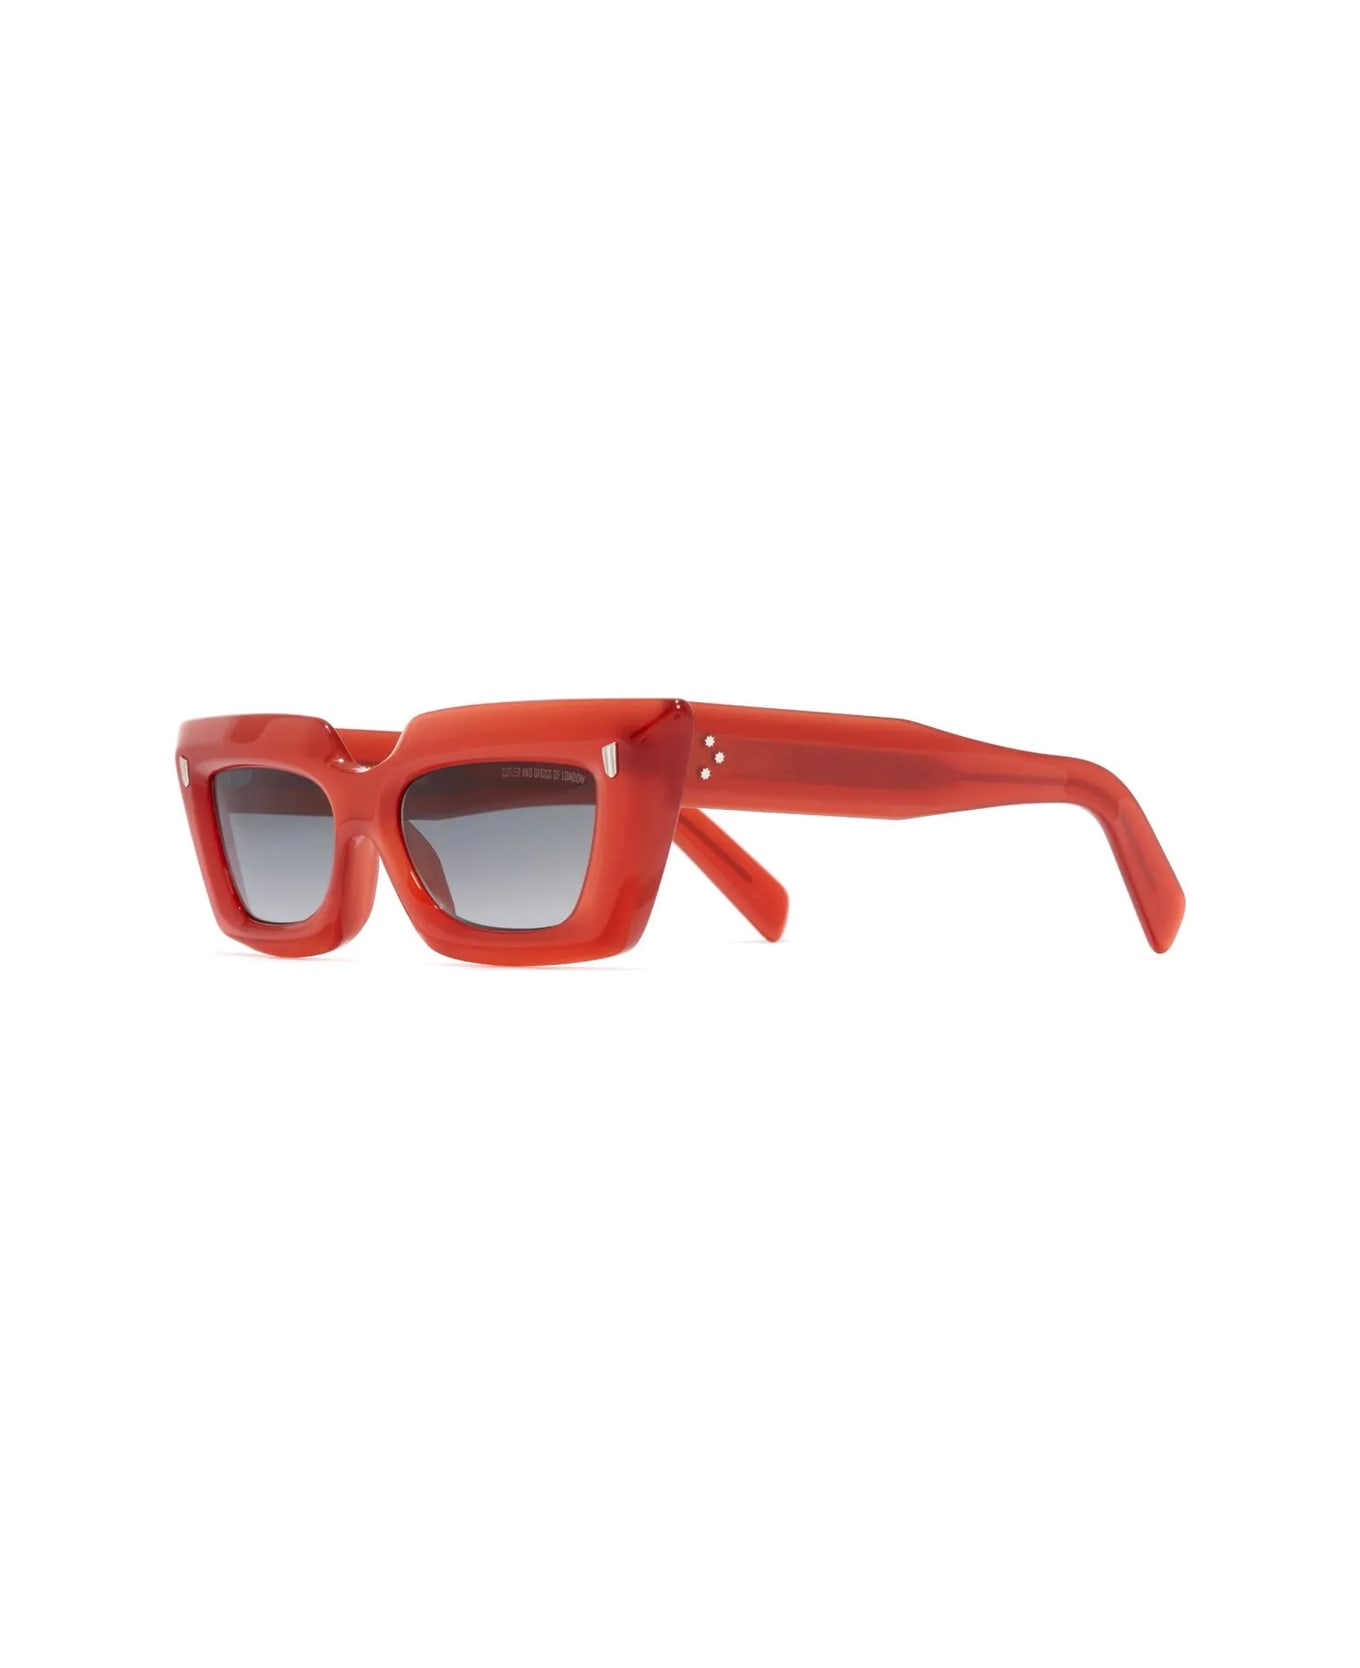 Cutler and Gross 1408 B1 Tomato Sunglasses - Rosso サングラス